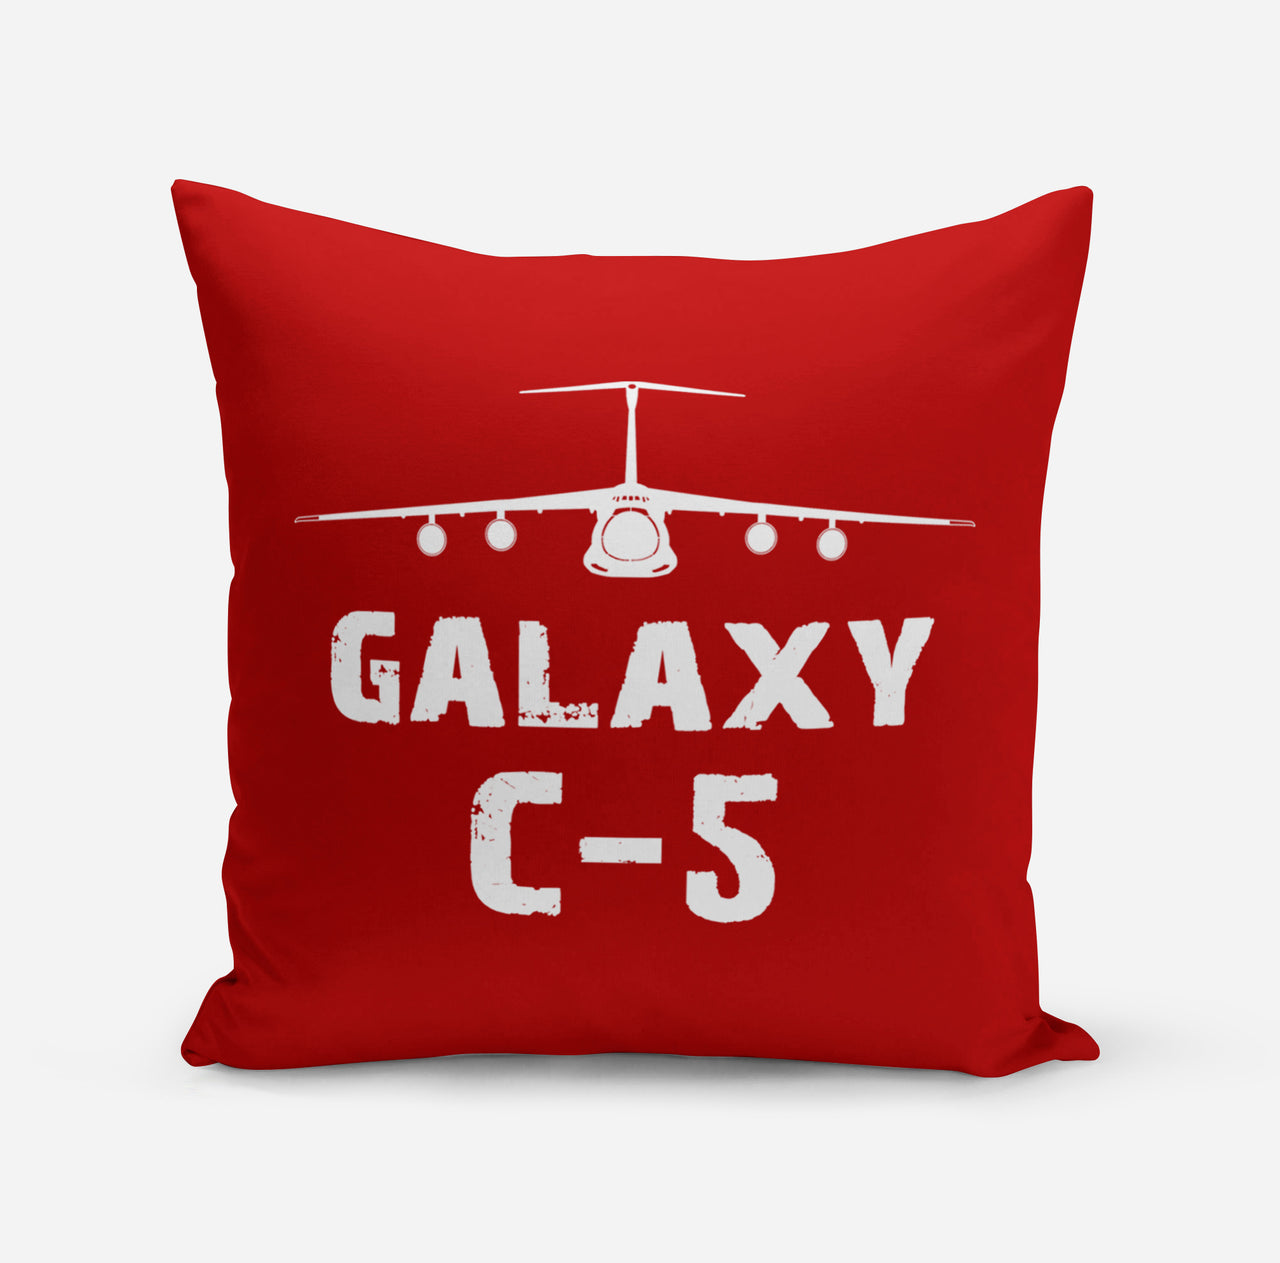 Galaxy C-5 & Plane Designed Pillows